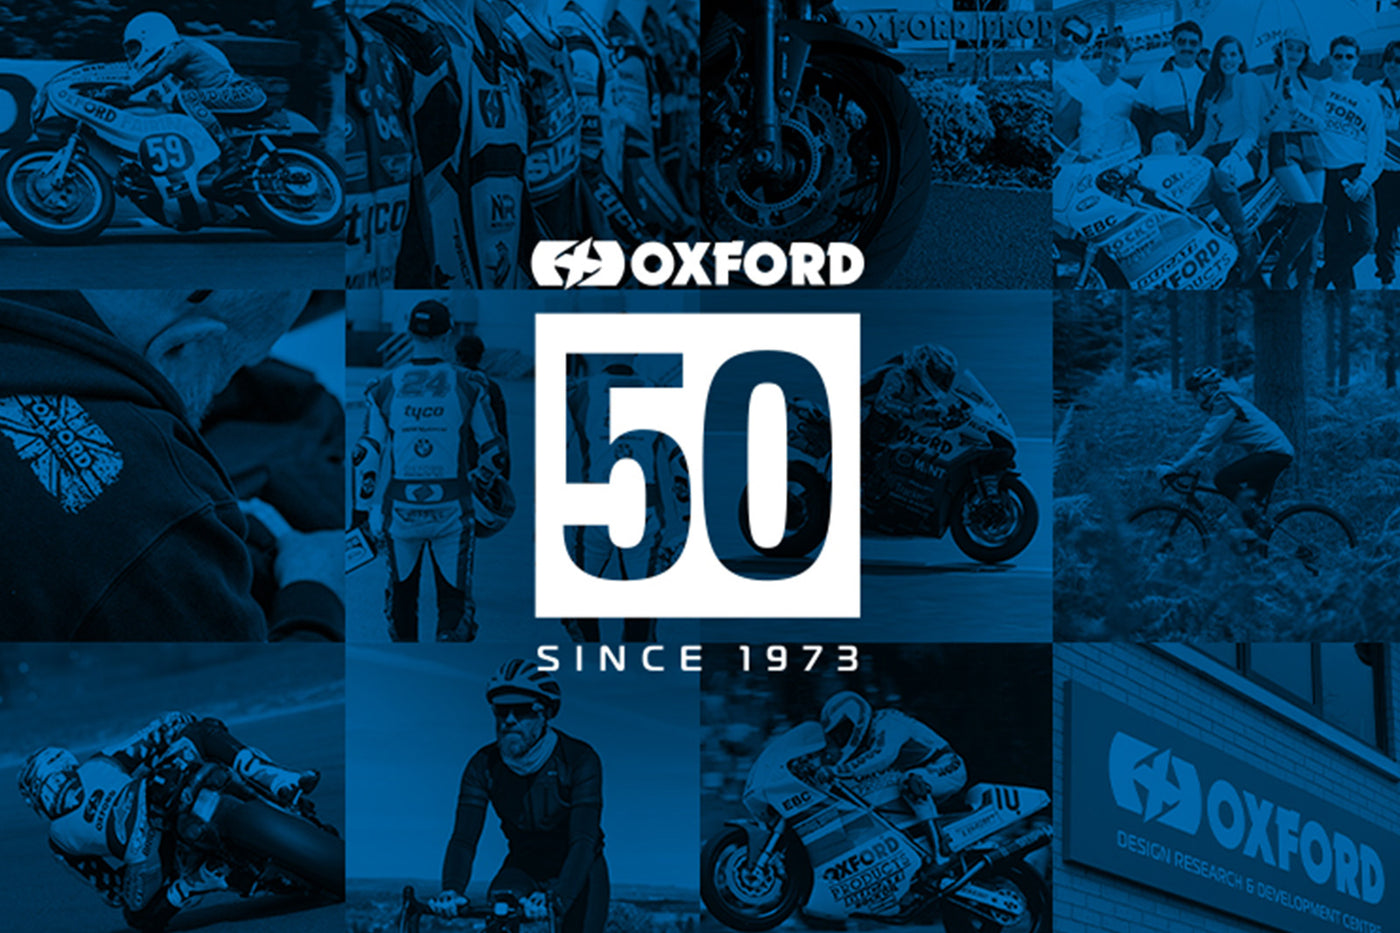 OXFORD CELEBRATES ITS 50TH BIRTHDAY IN 2023!